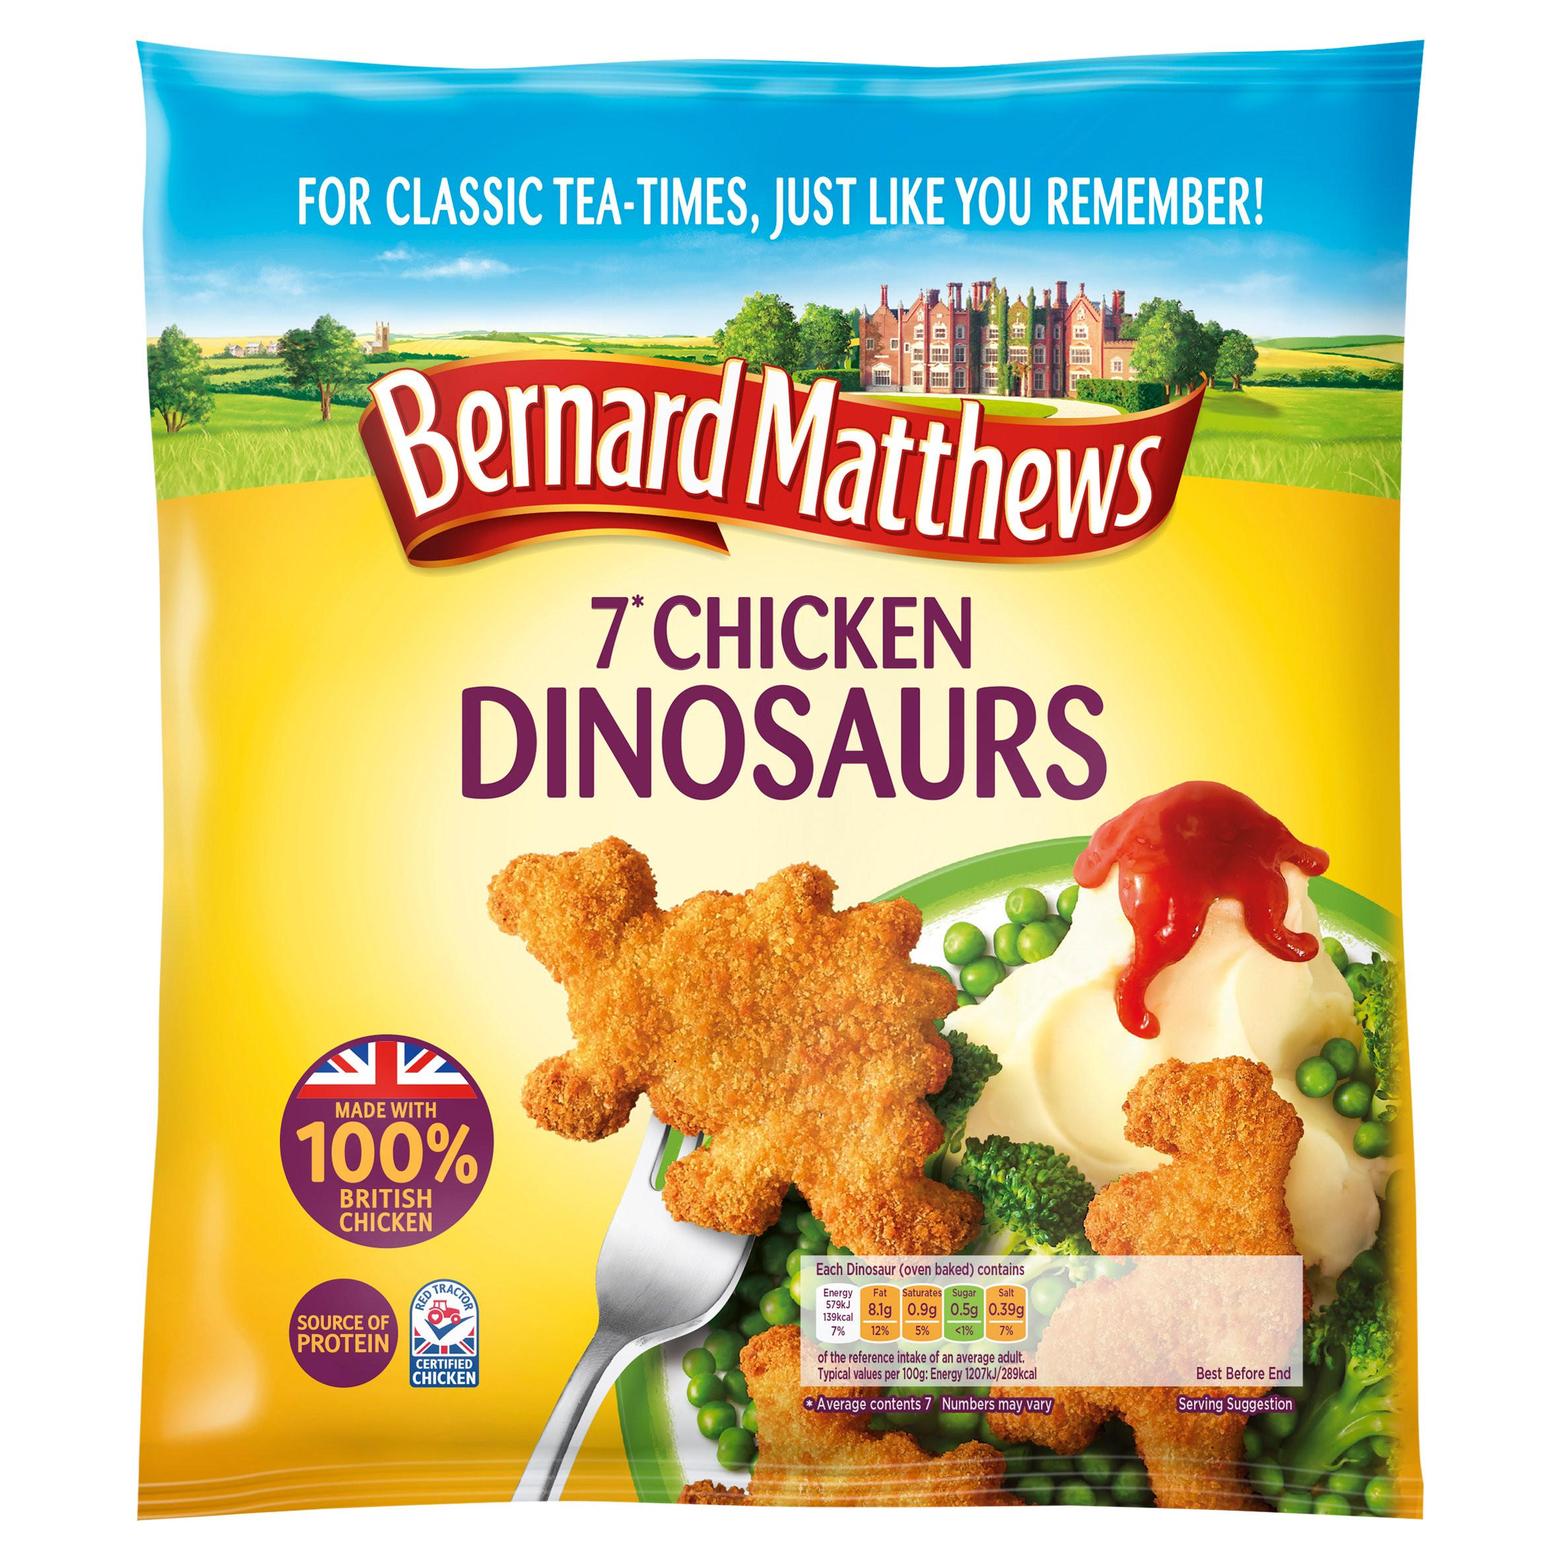 Bernard Matthews 7 Chicken Dinosaurs 350g offers at £1 in Iceland